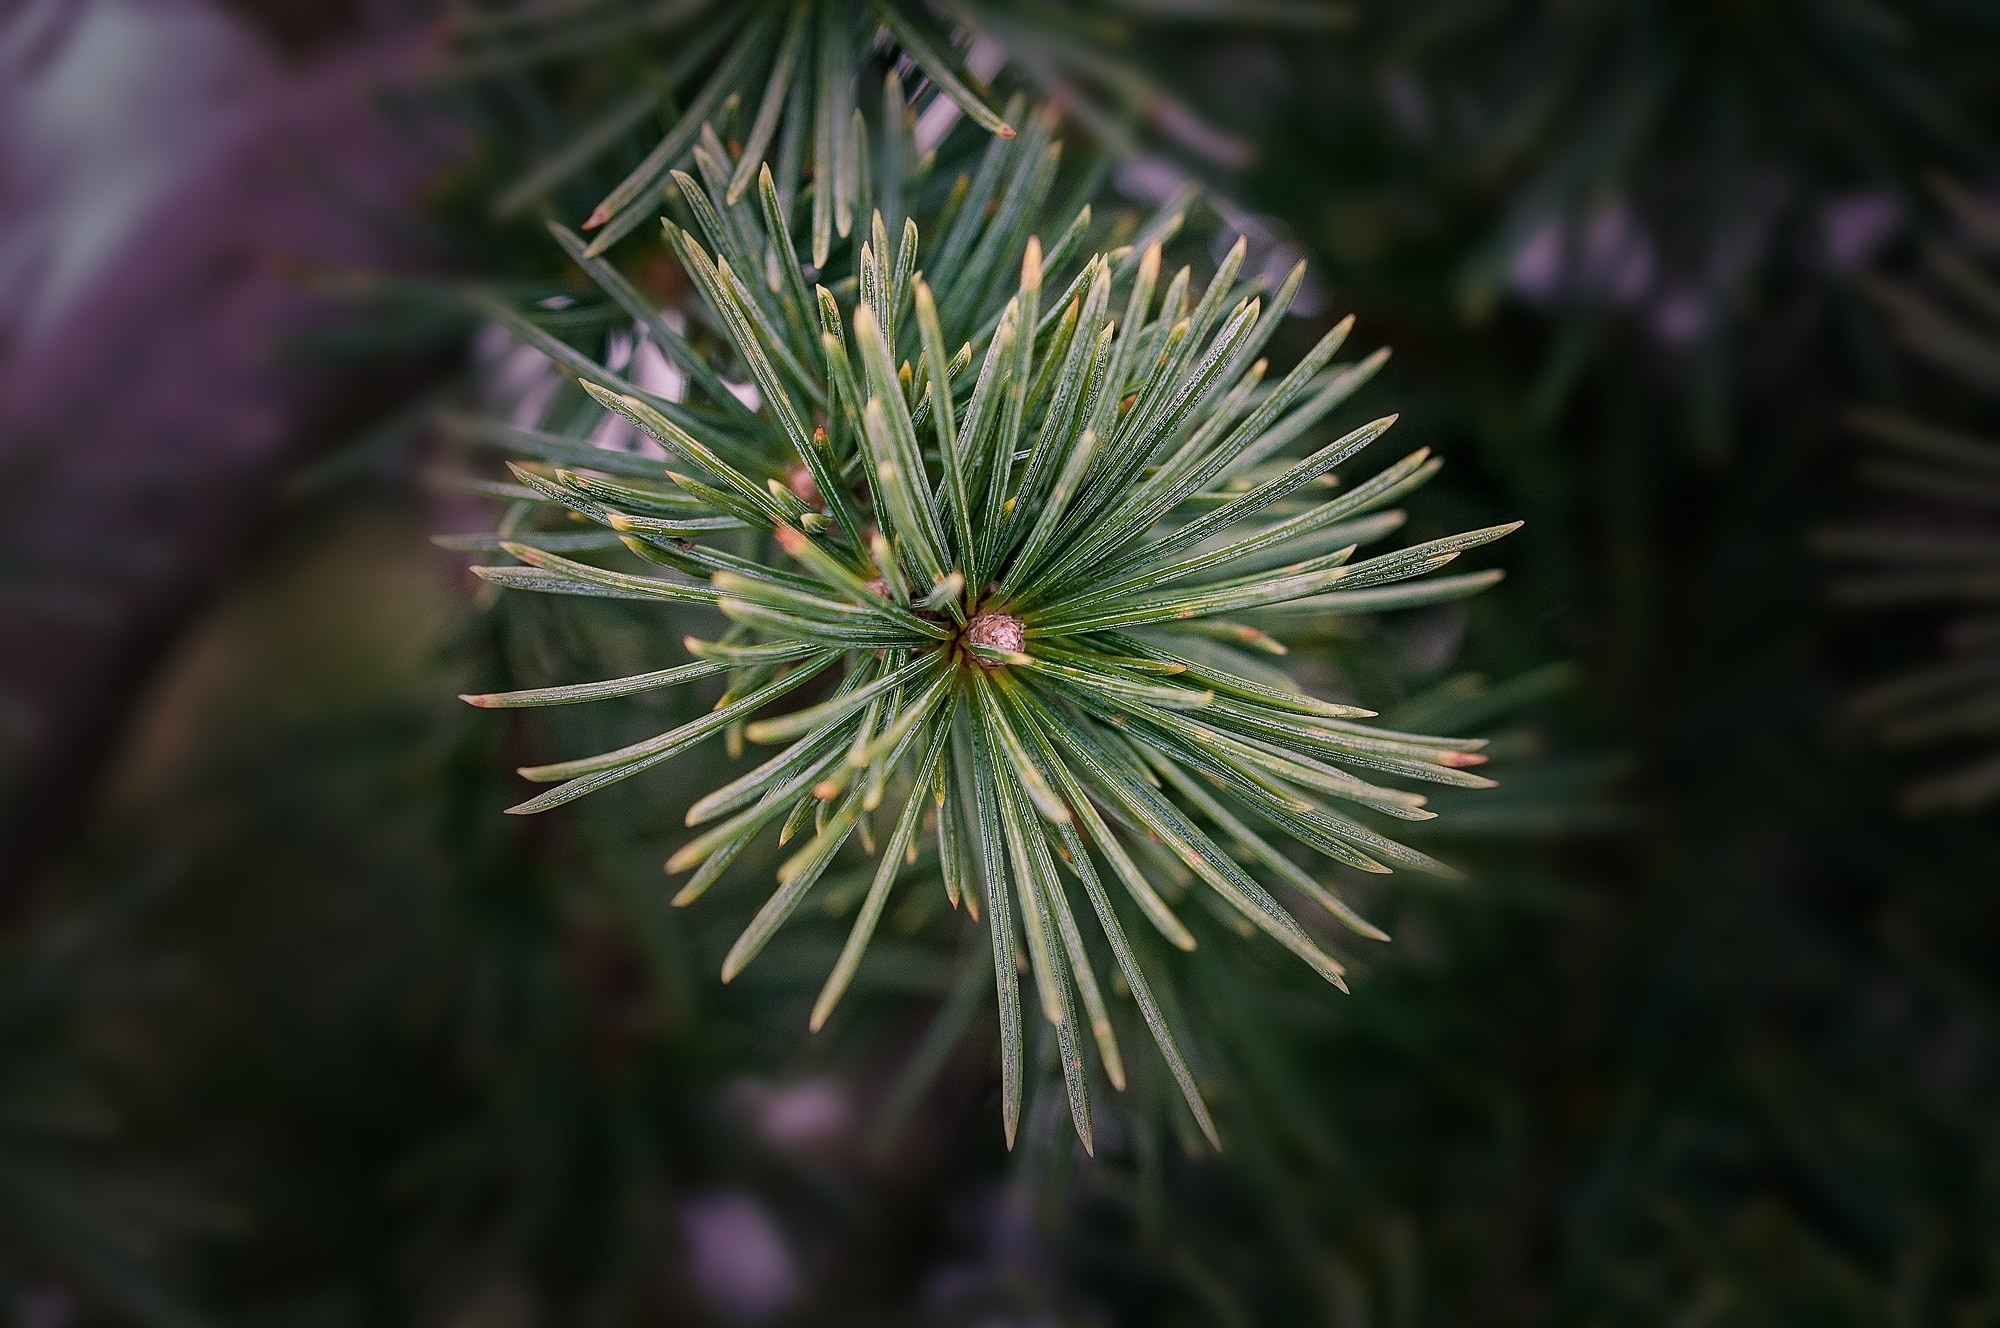 green pine tree